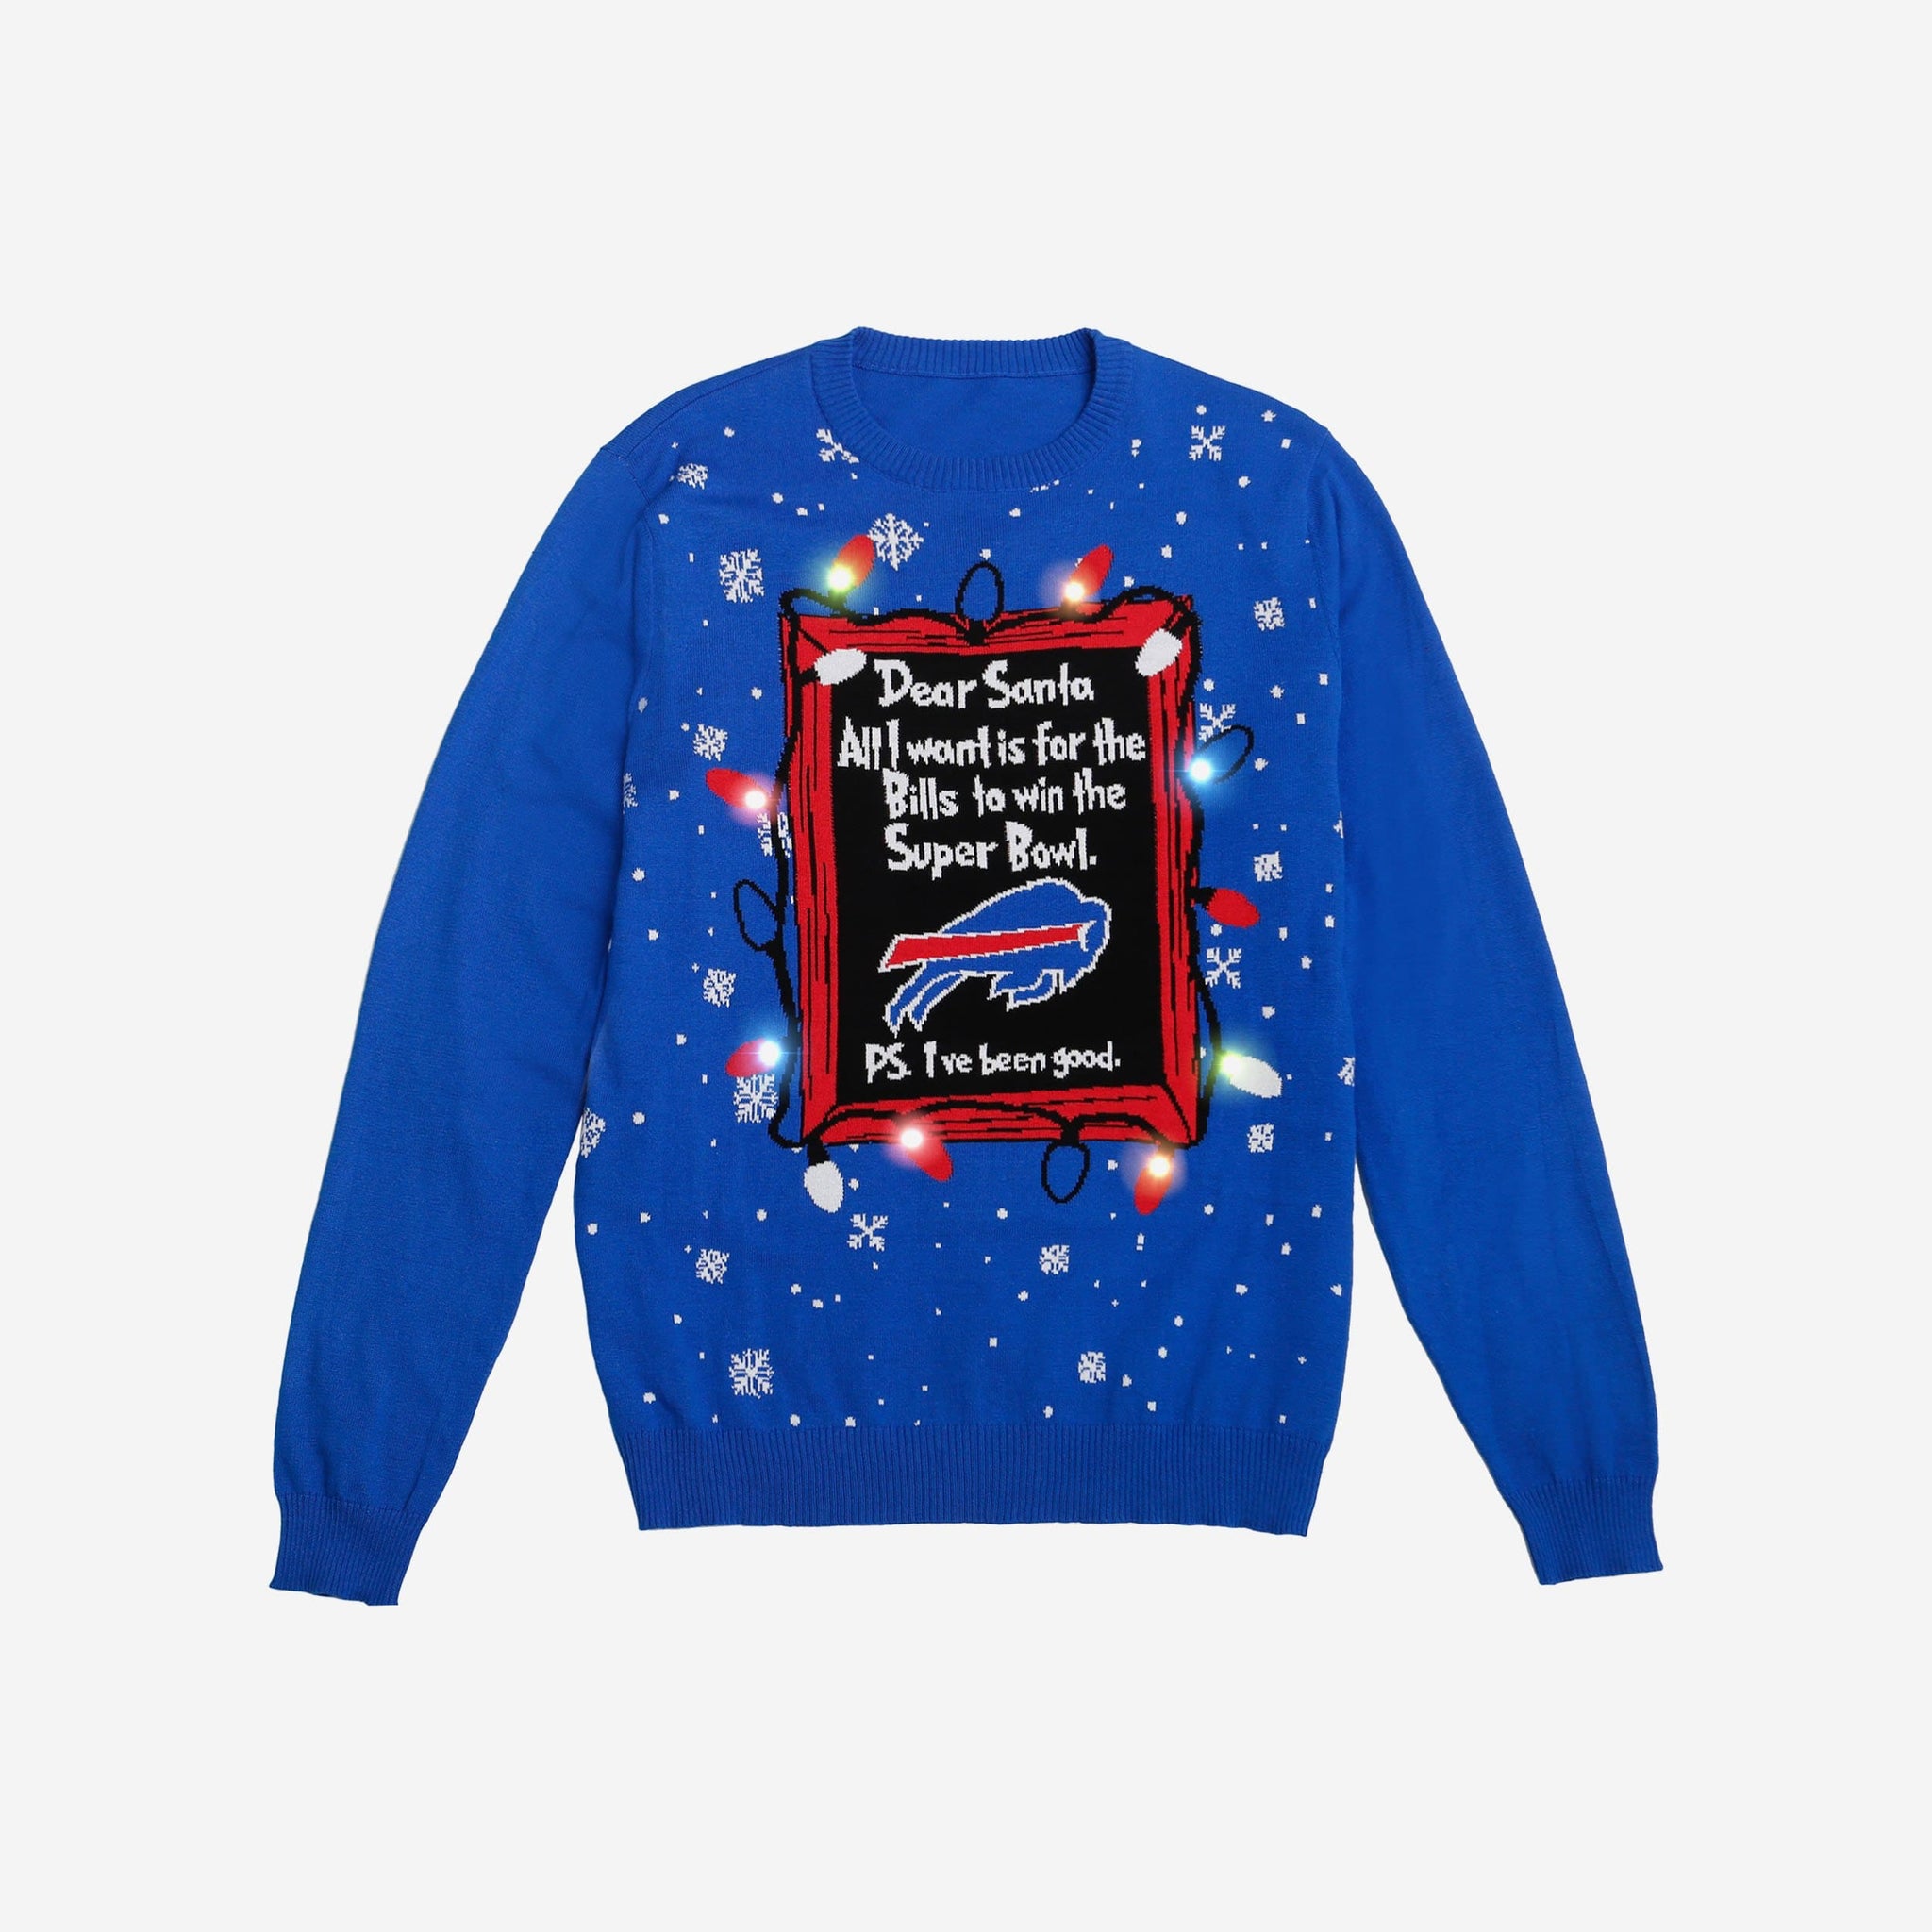 Buffalo Blue Jays logo shirt, hoodie, sweater, long sleeve and